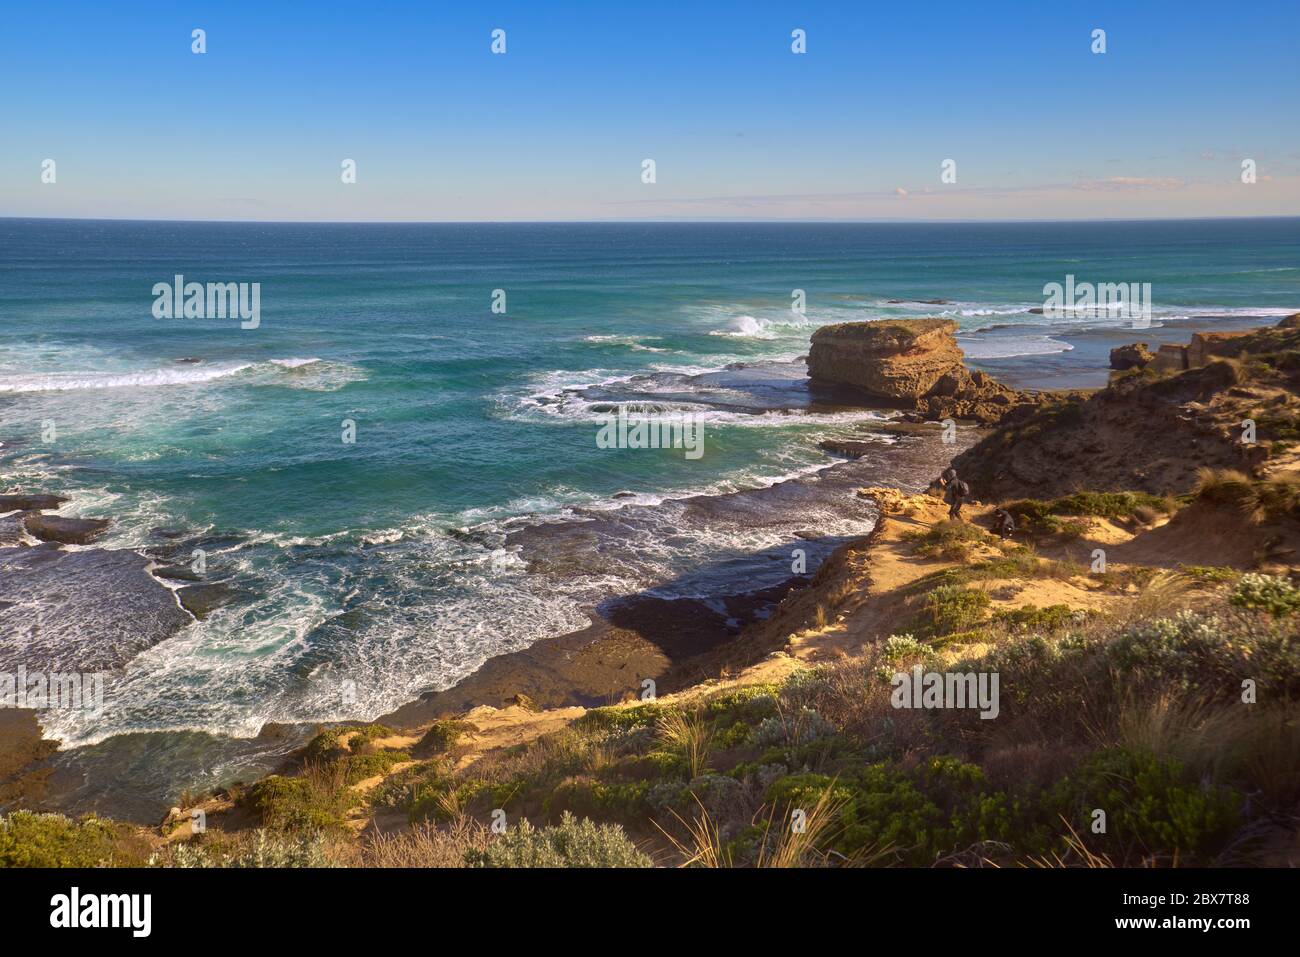 St Pauls Beach, Mornington Peninsula, Melbourne, Australia Stock Photo